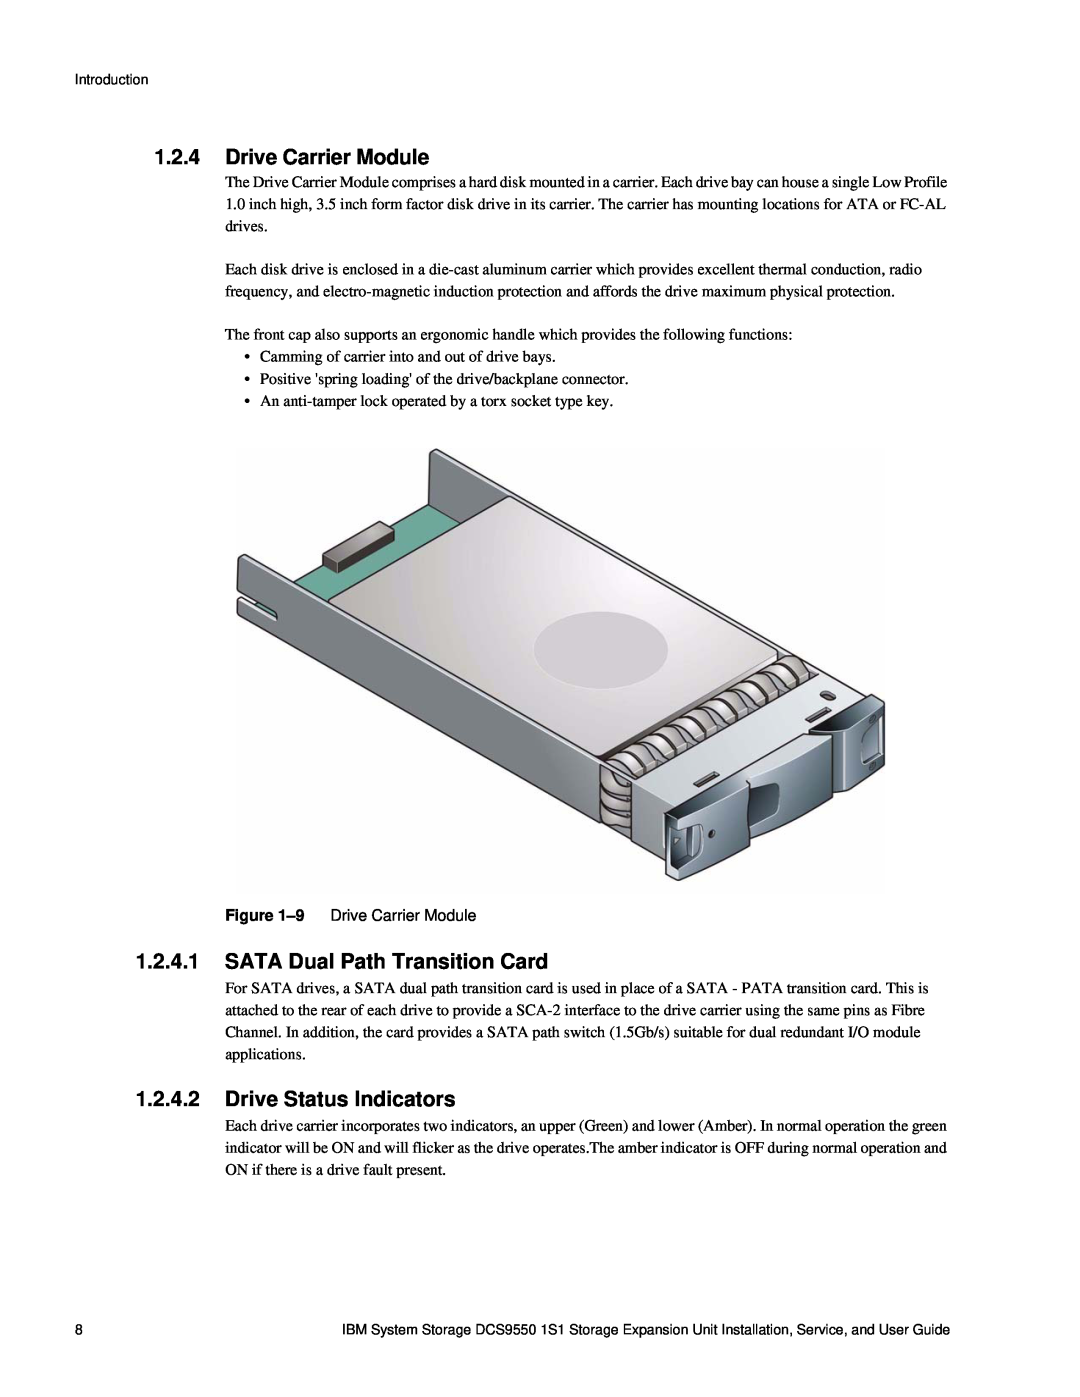 IBM DCS9550 1S1 manual Drive Carrier Module, SATA Dual Path Transition Card, Drive Status Indicators 